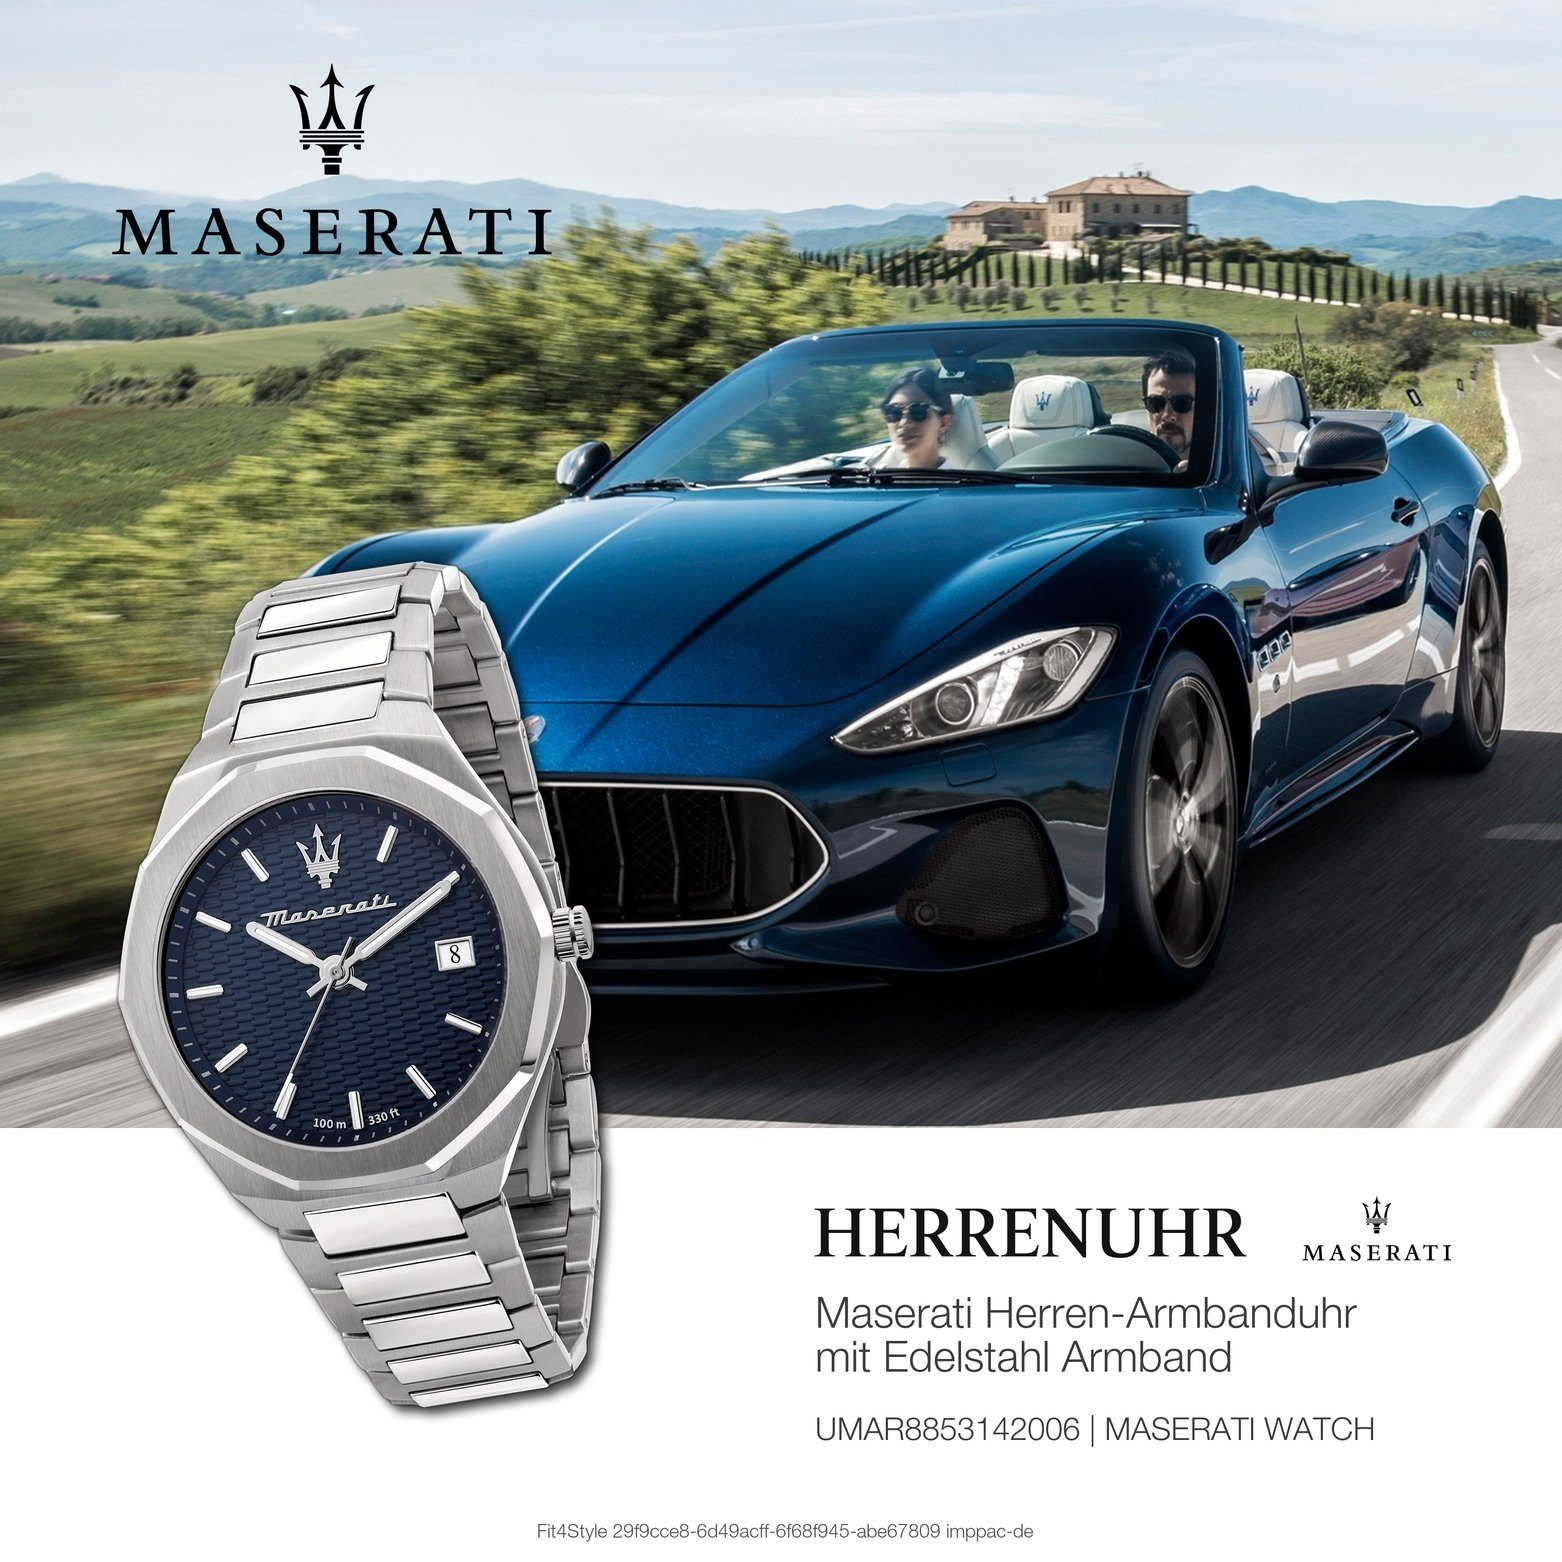 groß Herren 42mm) MASERATI Herrenuhr Made-In Quarzuhr Uhr Analog Italy Edelstahlarmband, Maserati (ca. STILE, silber rund,